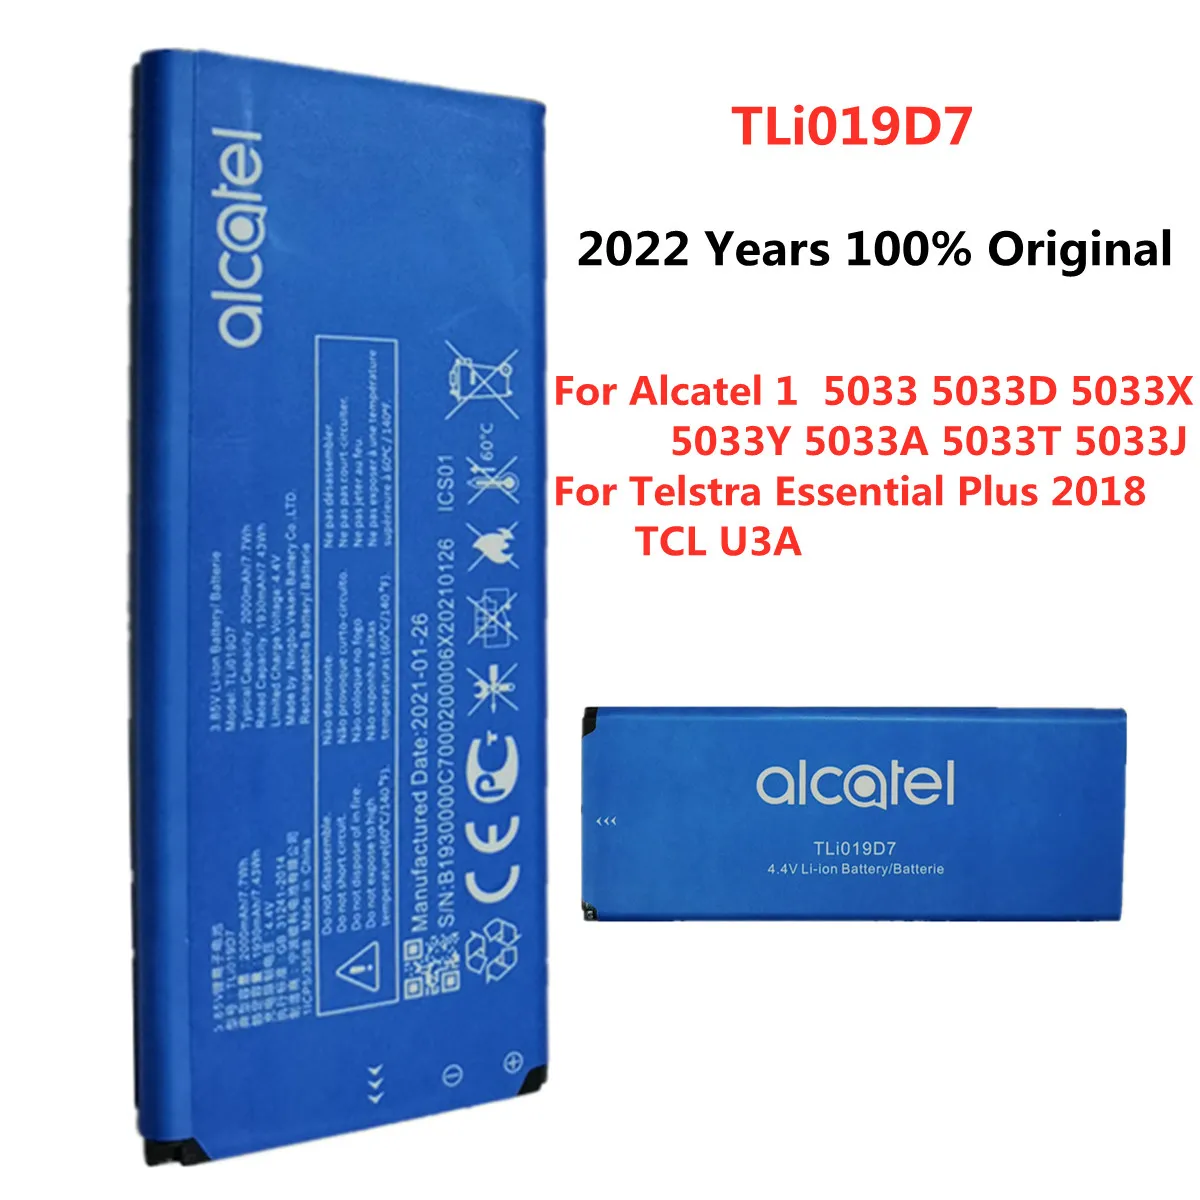 2023 Новый TLi019D7 2000 мАч Для Alcatel 1 5033 5033D 5033X 5033Y 5033A 5033T 5033J/Telstra Essential Plus 2018/TCL U3A Аккумулятор